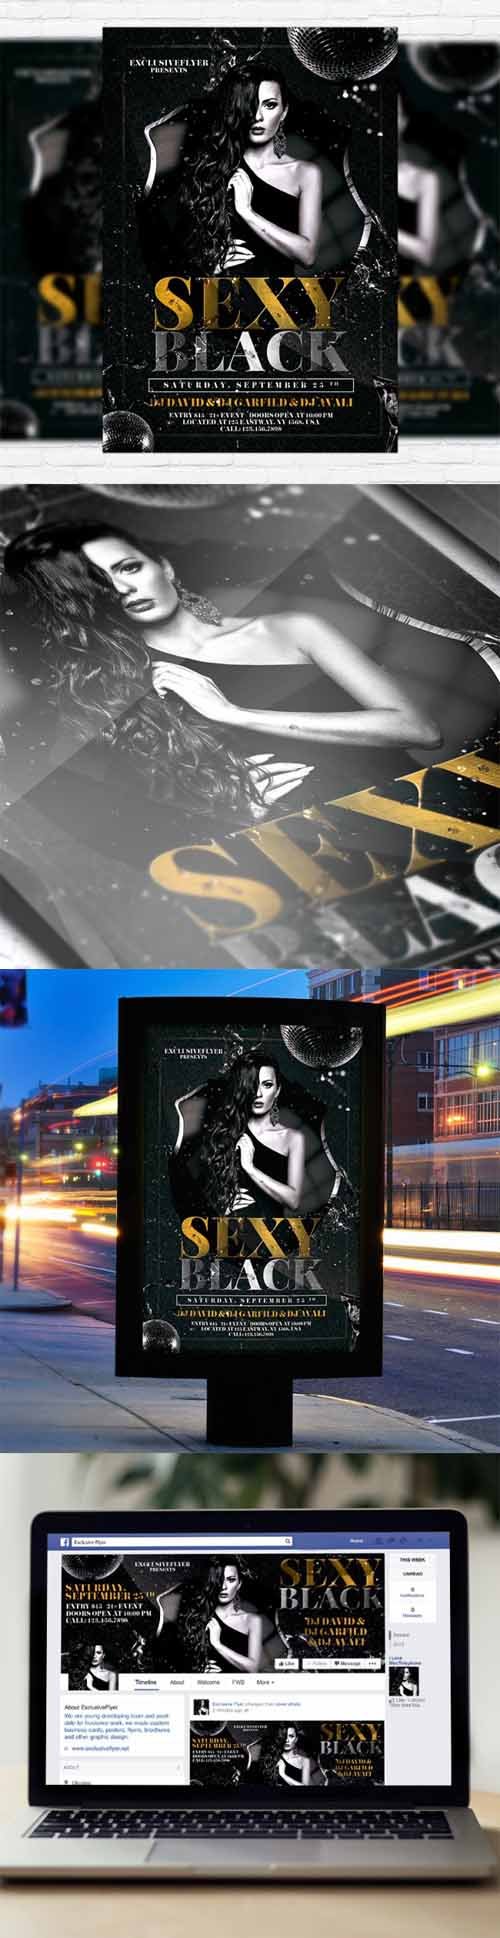 Flyer Template - Sexy Black + Facebook Cover